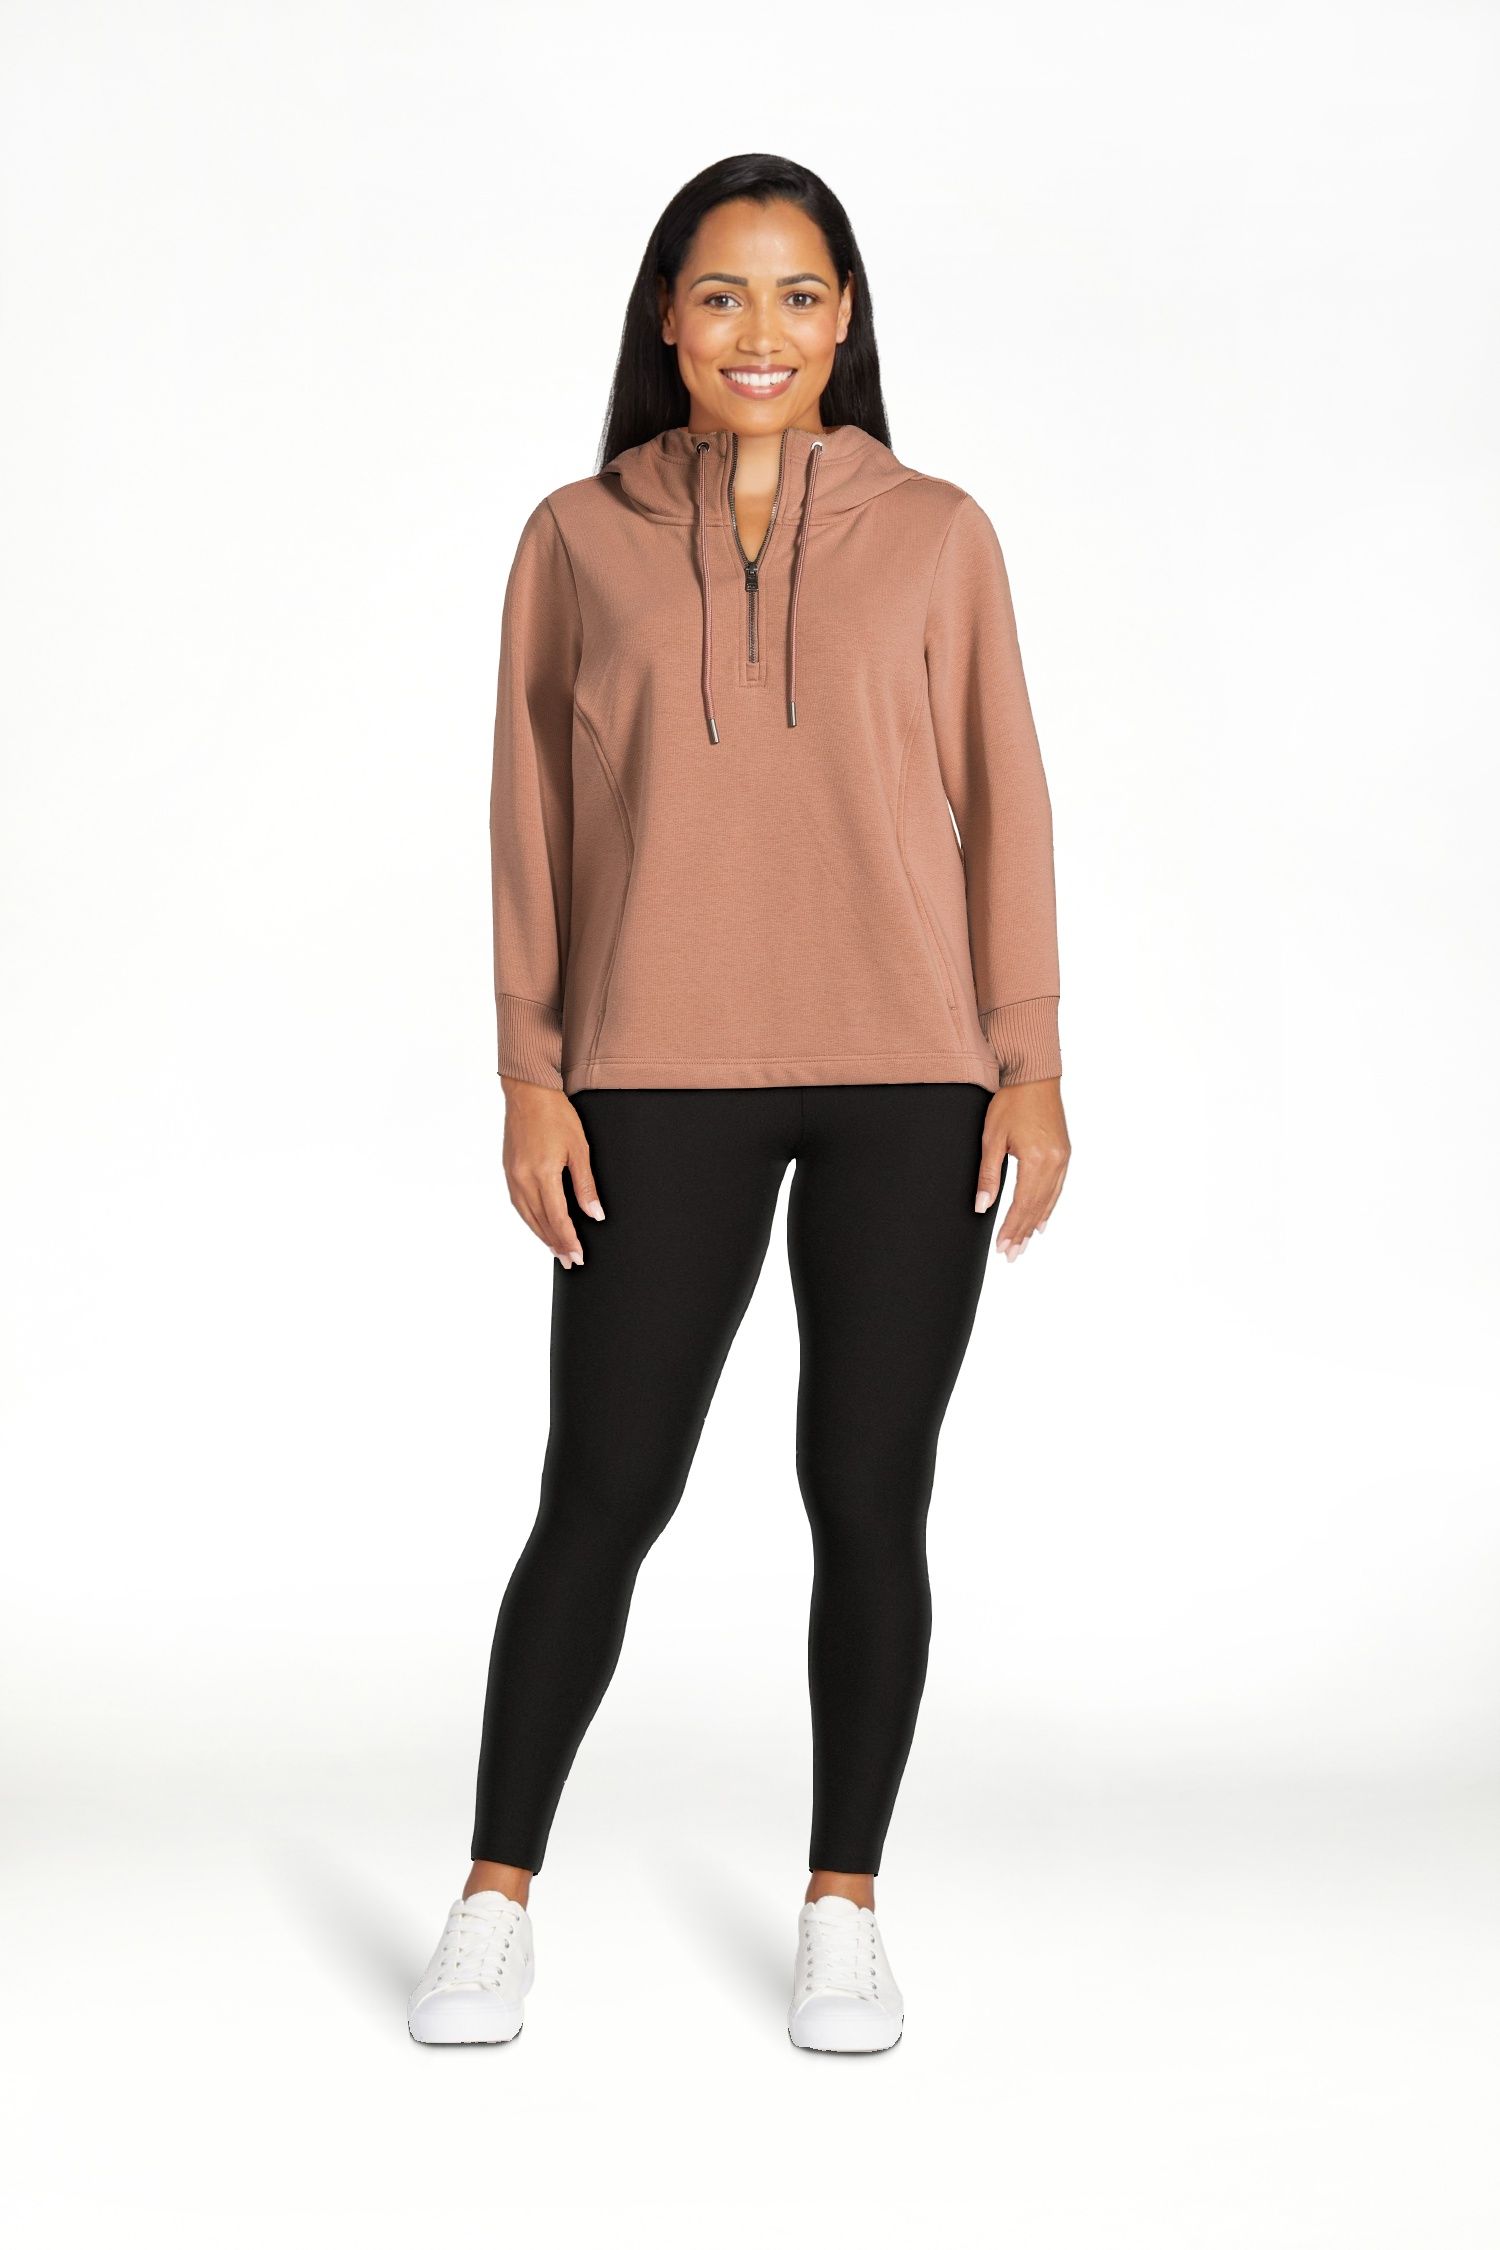 Avia Women's Quarter Zip Pullover Hoodie, Sizes XS-3XL | Walmart (US)